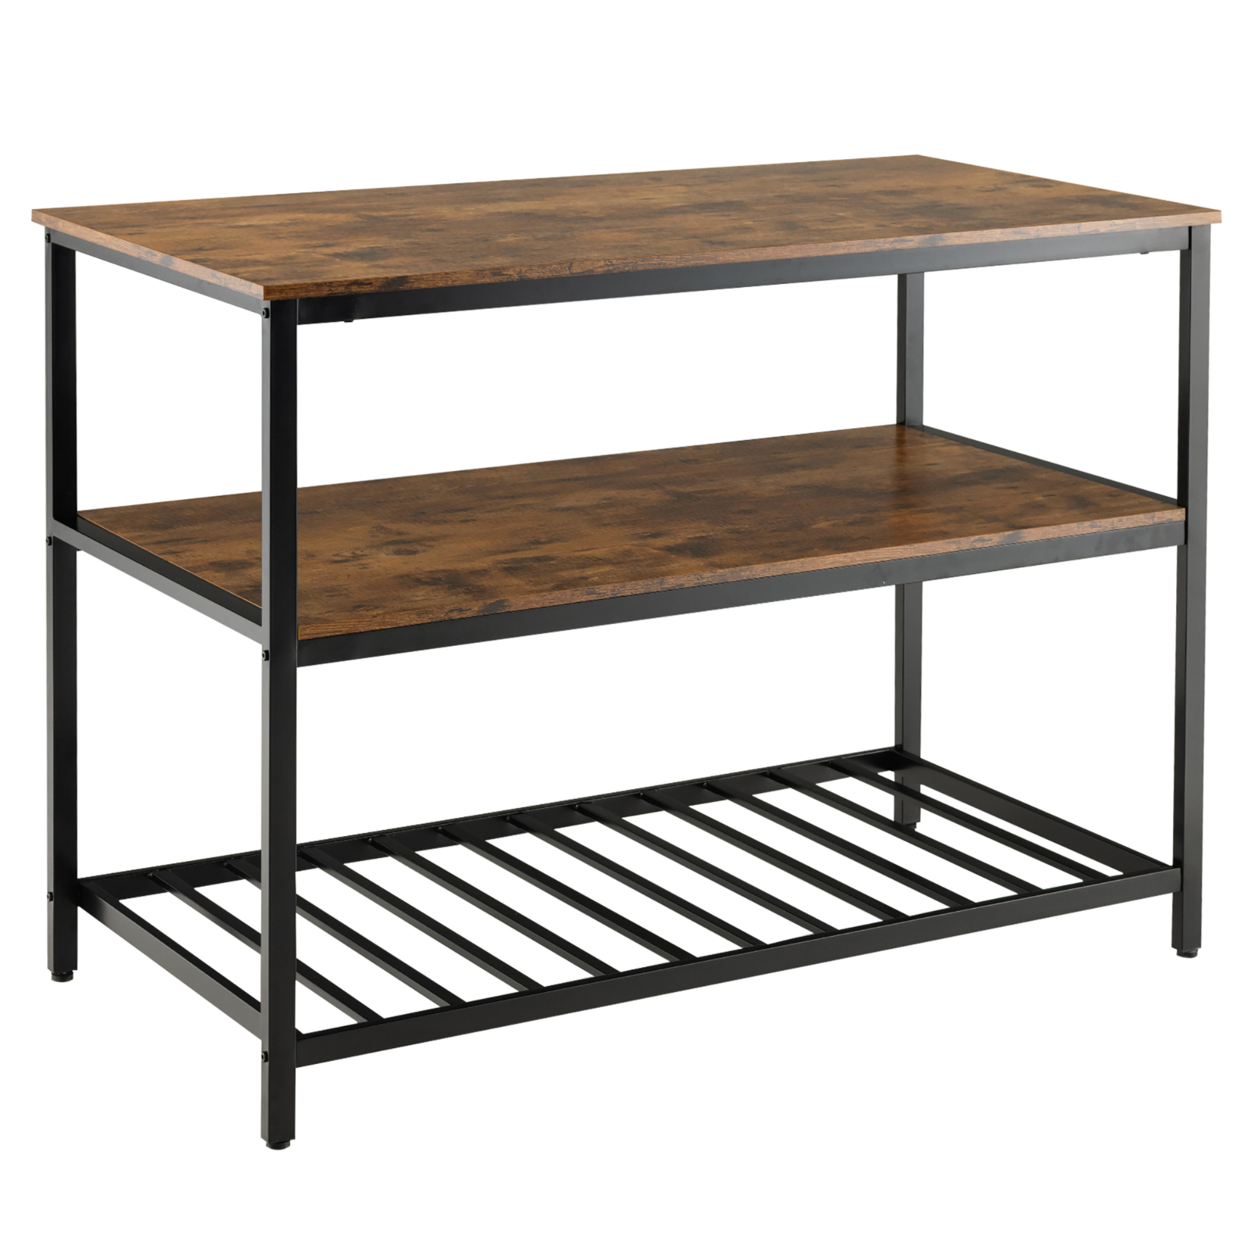 3 Shelves Kitchen Island Industrial Wood And Metal Bar Table W/ Bottom Wine Rack